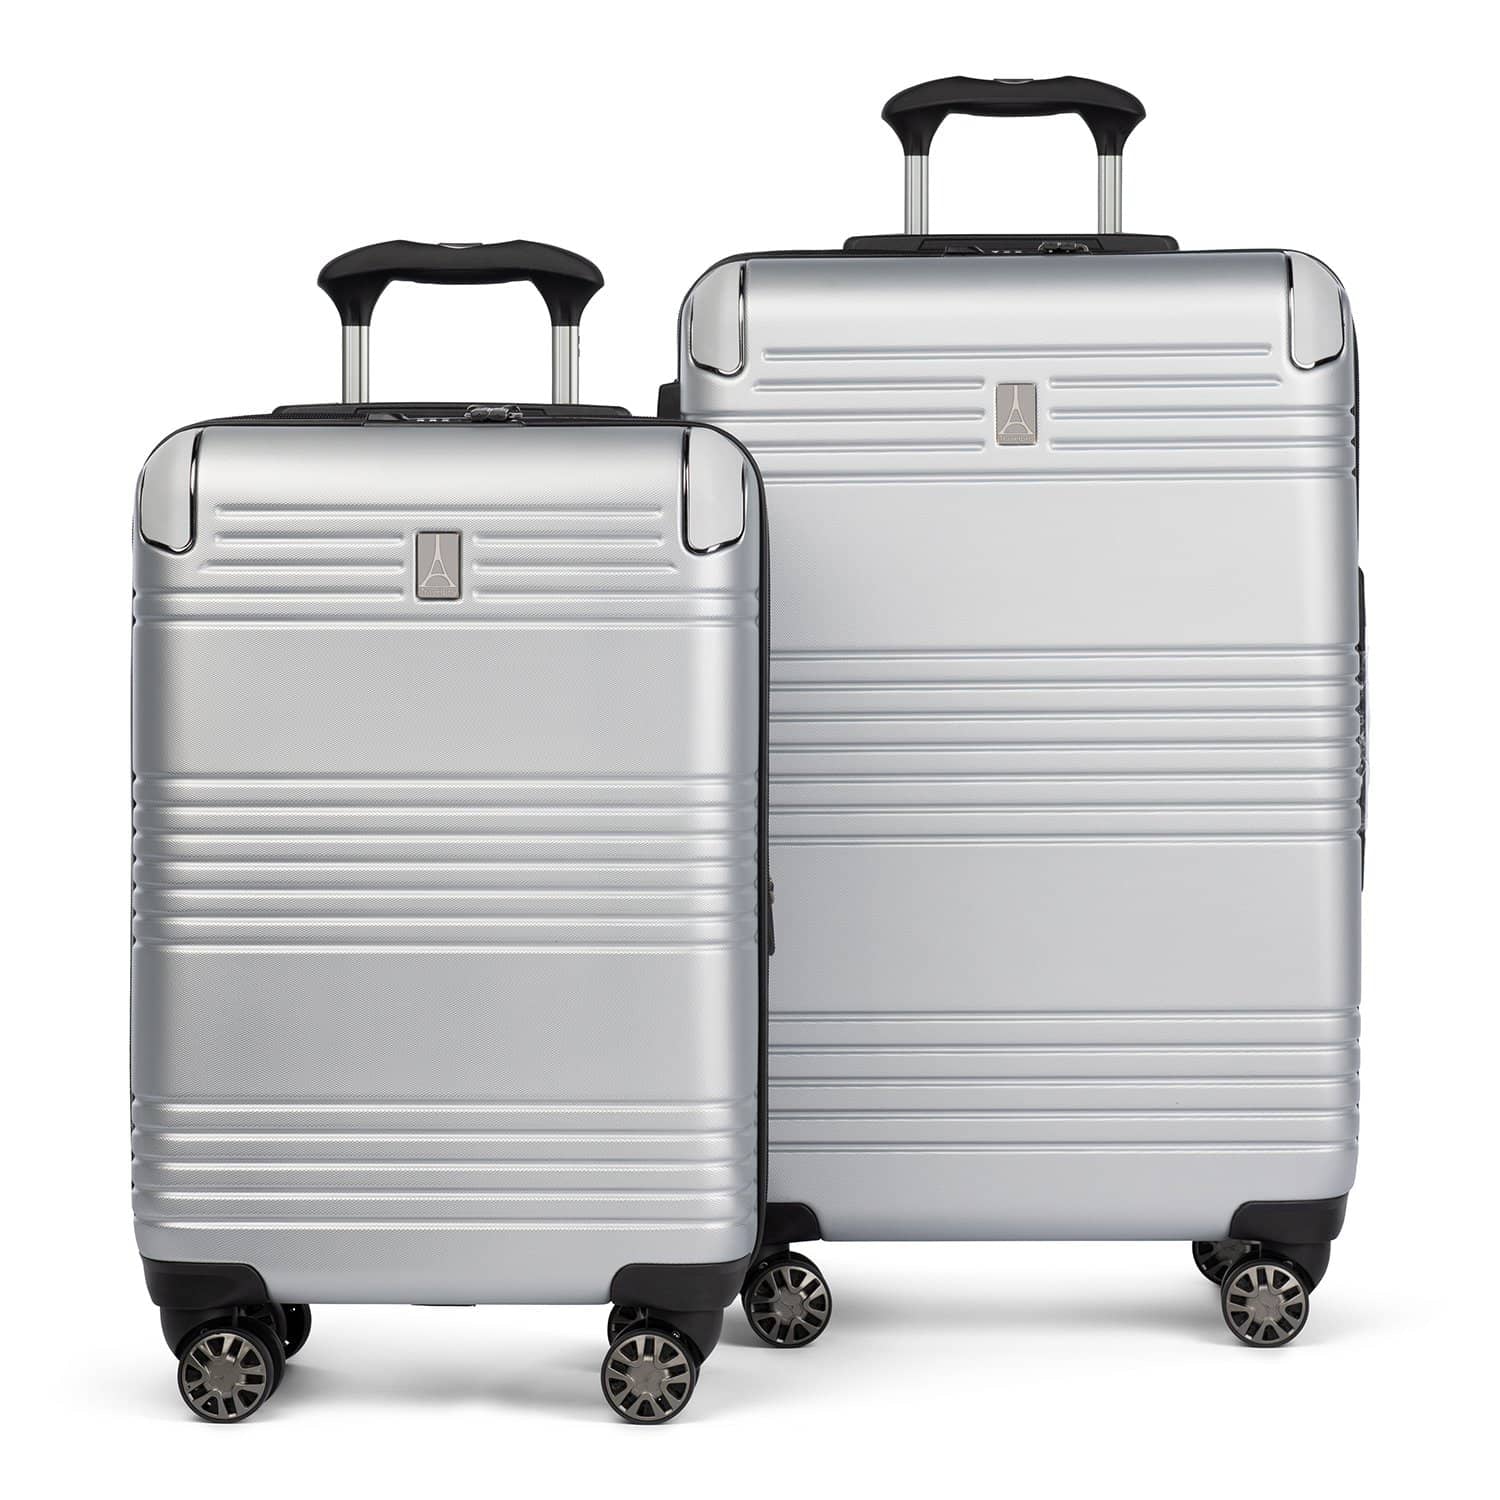 Travel Pro Suitcase: